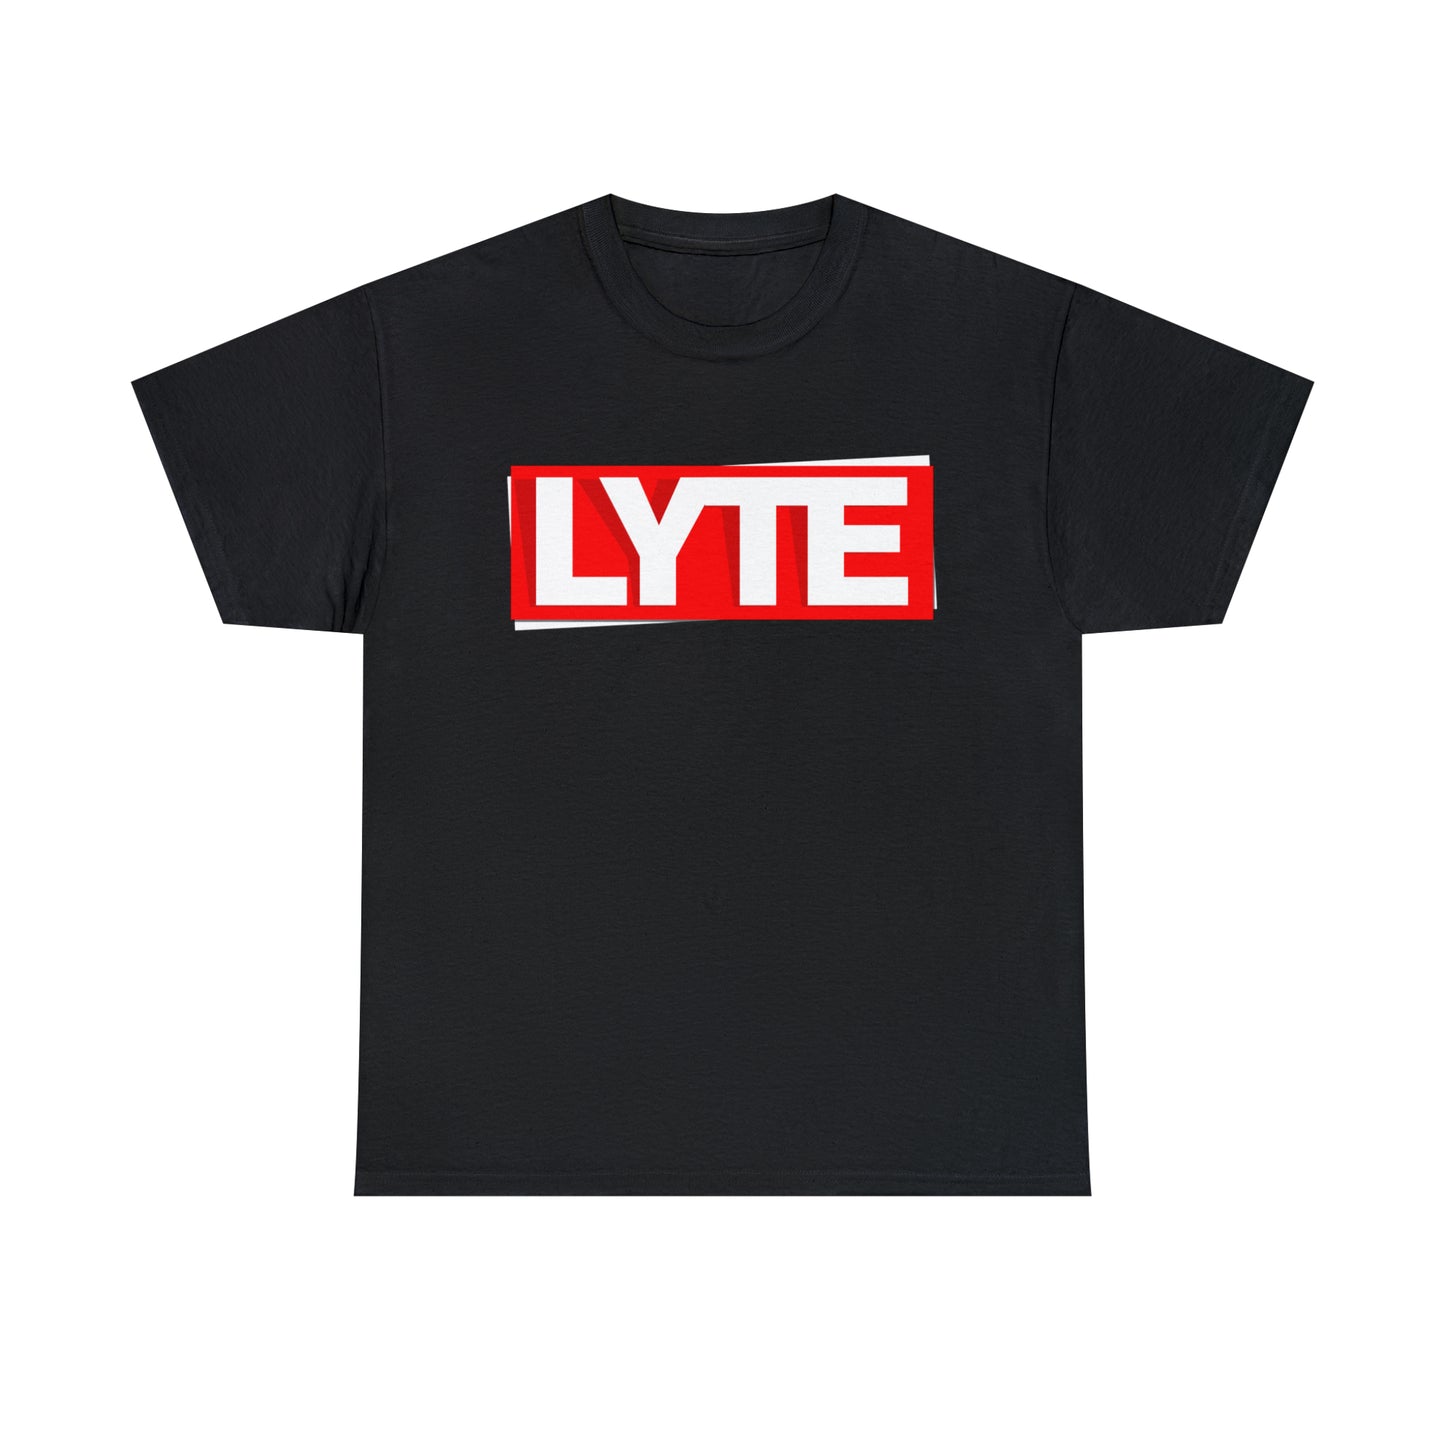 Lyte "Boxed" T-Shirt